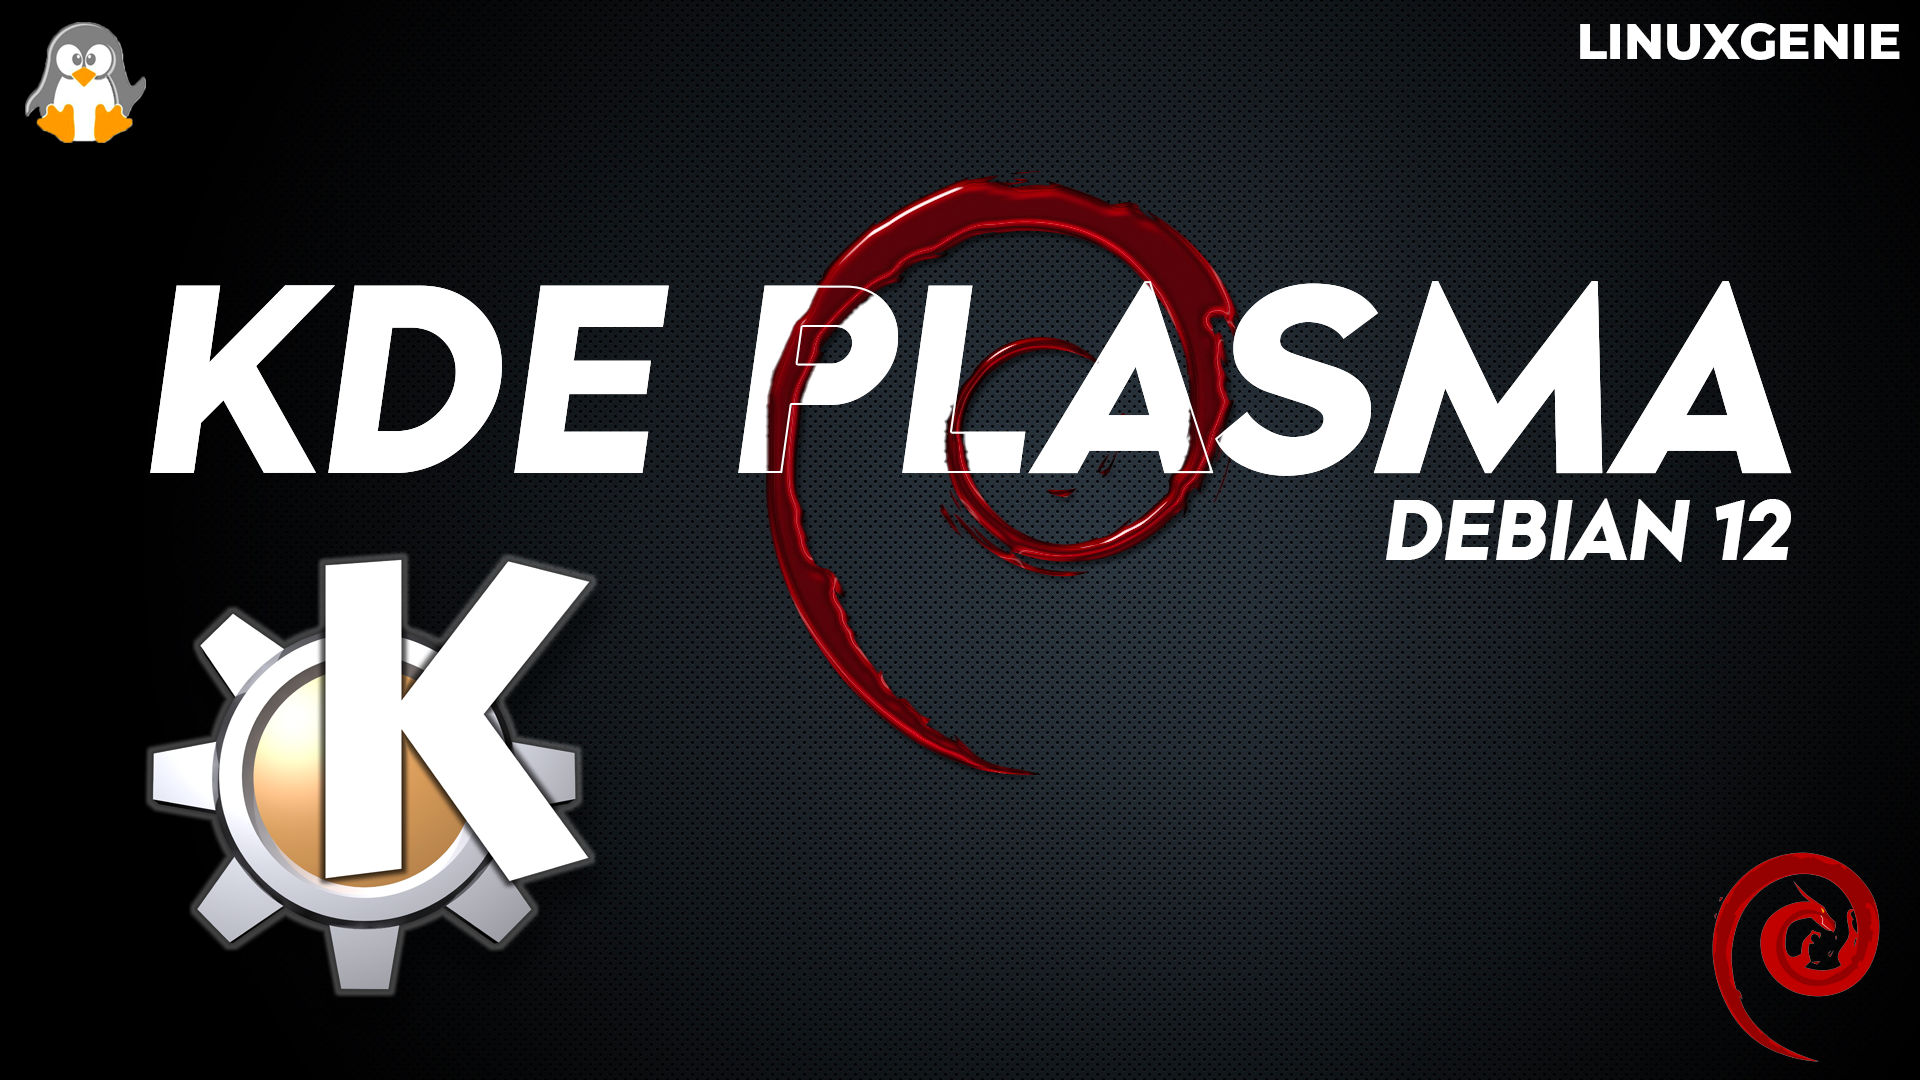 How to Install KDE Plasma on Debian 12?